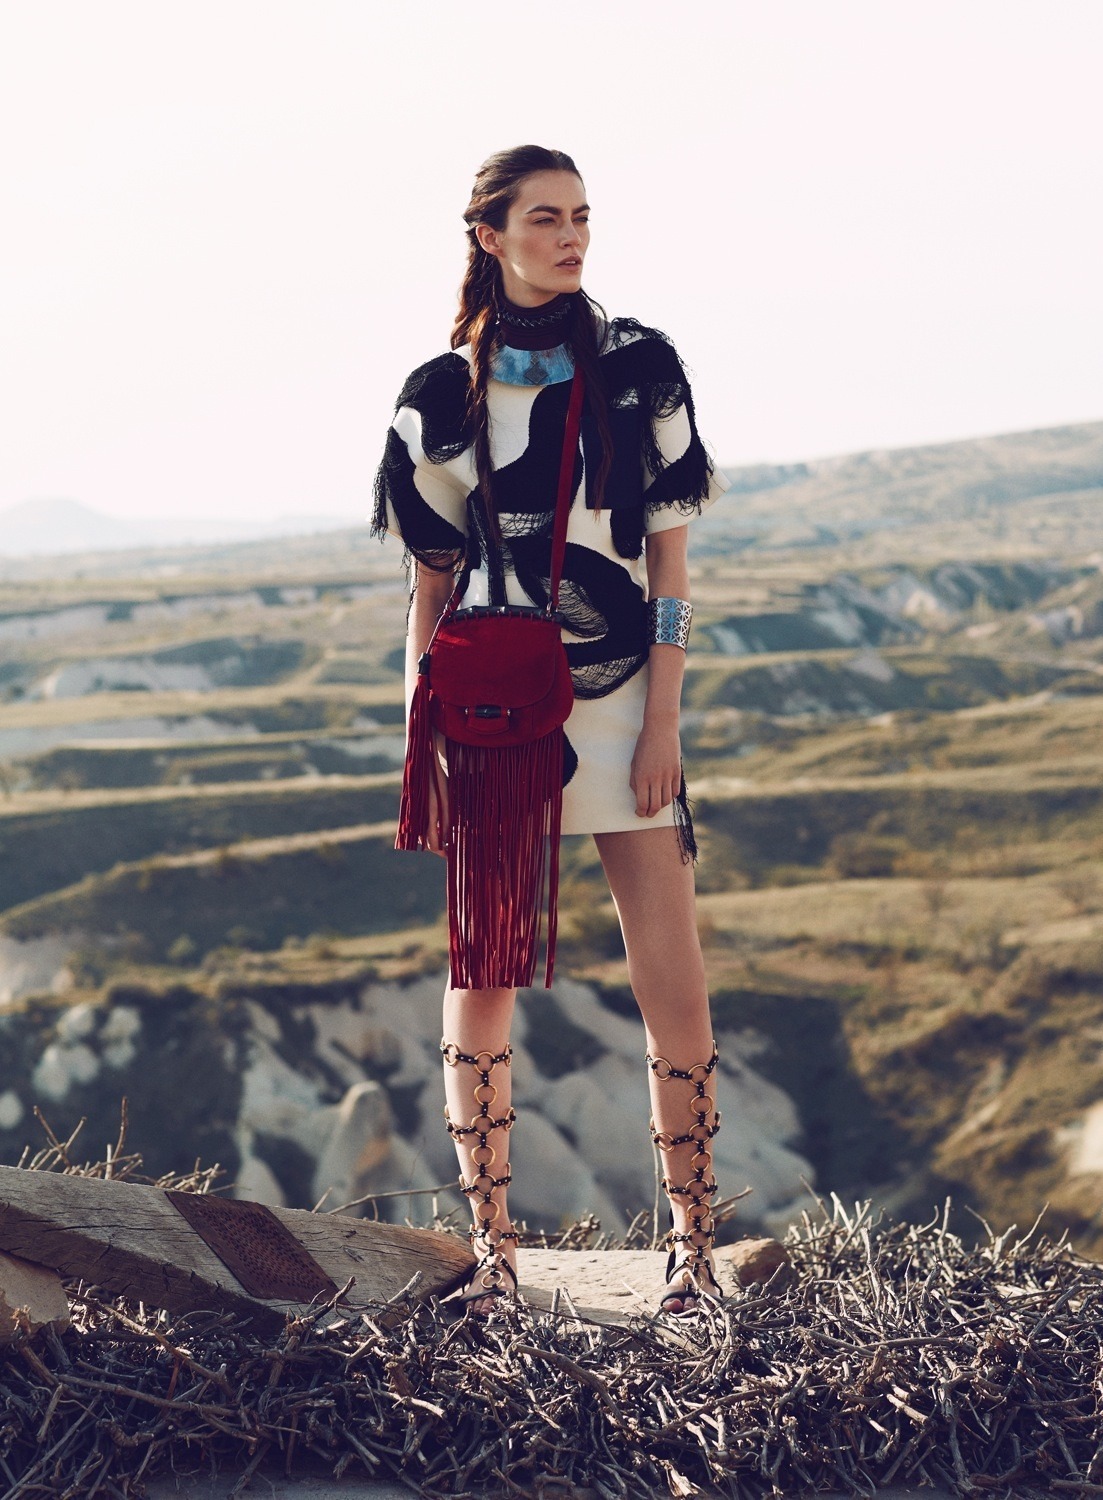 Patrycja Gardygajlo by Emre Guven for Vogue Turkey, May 2014